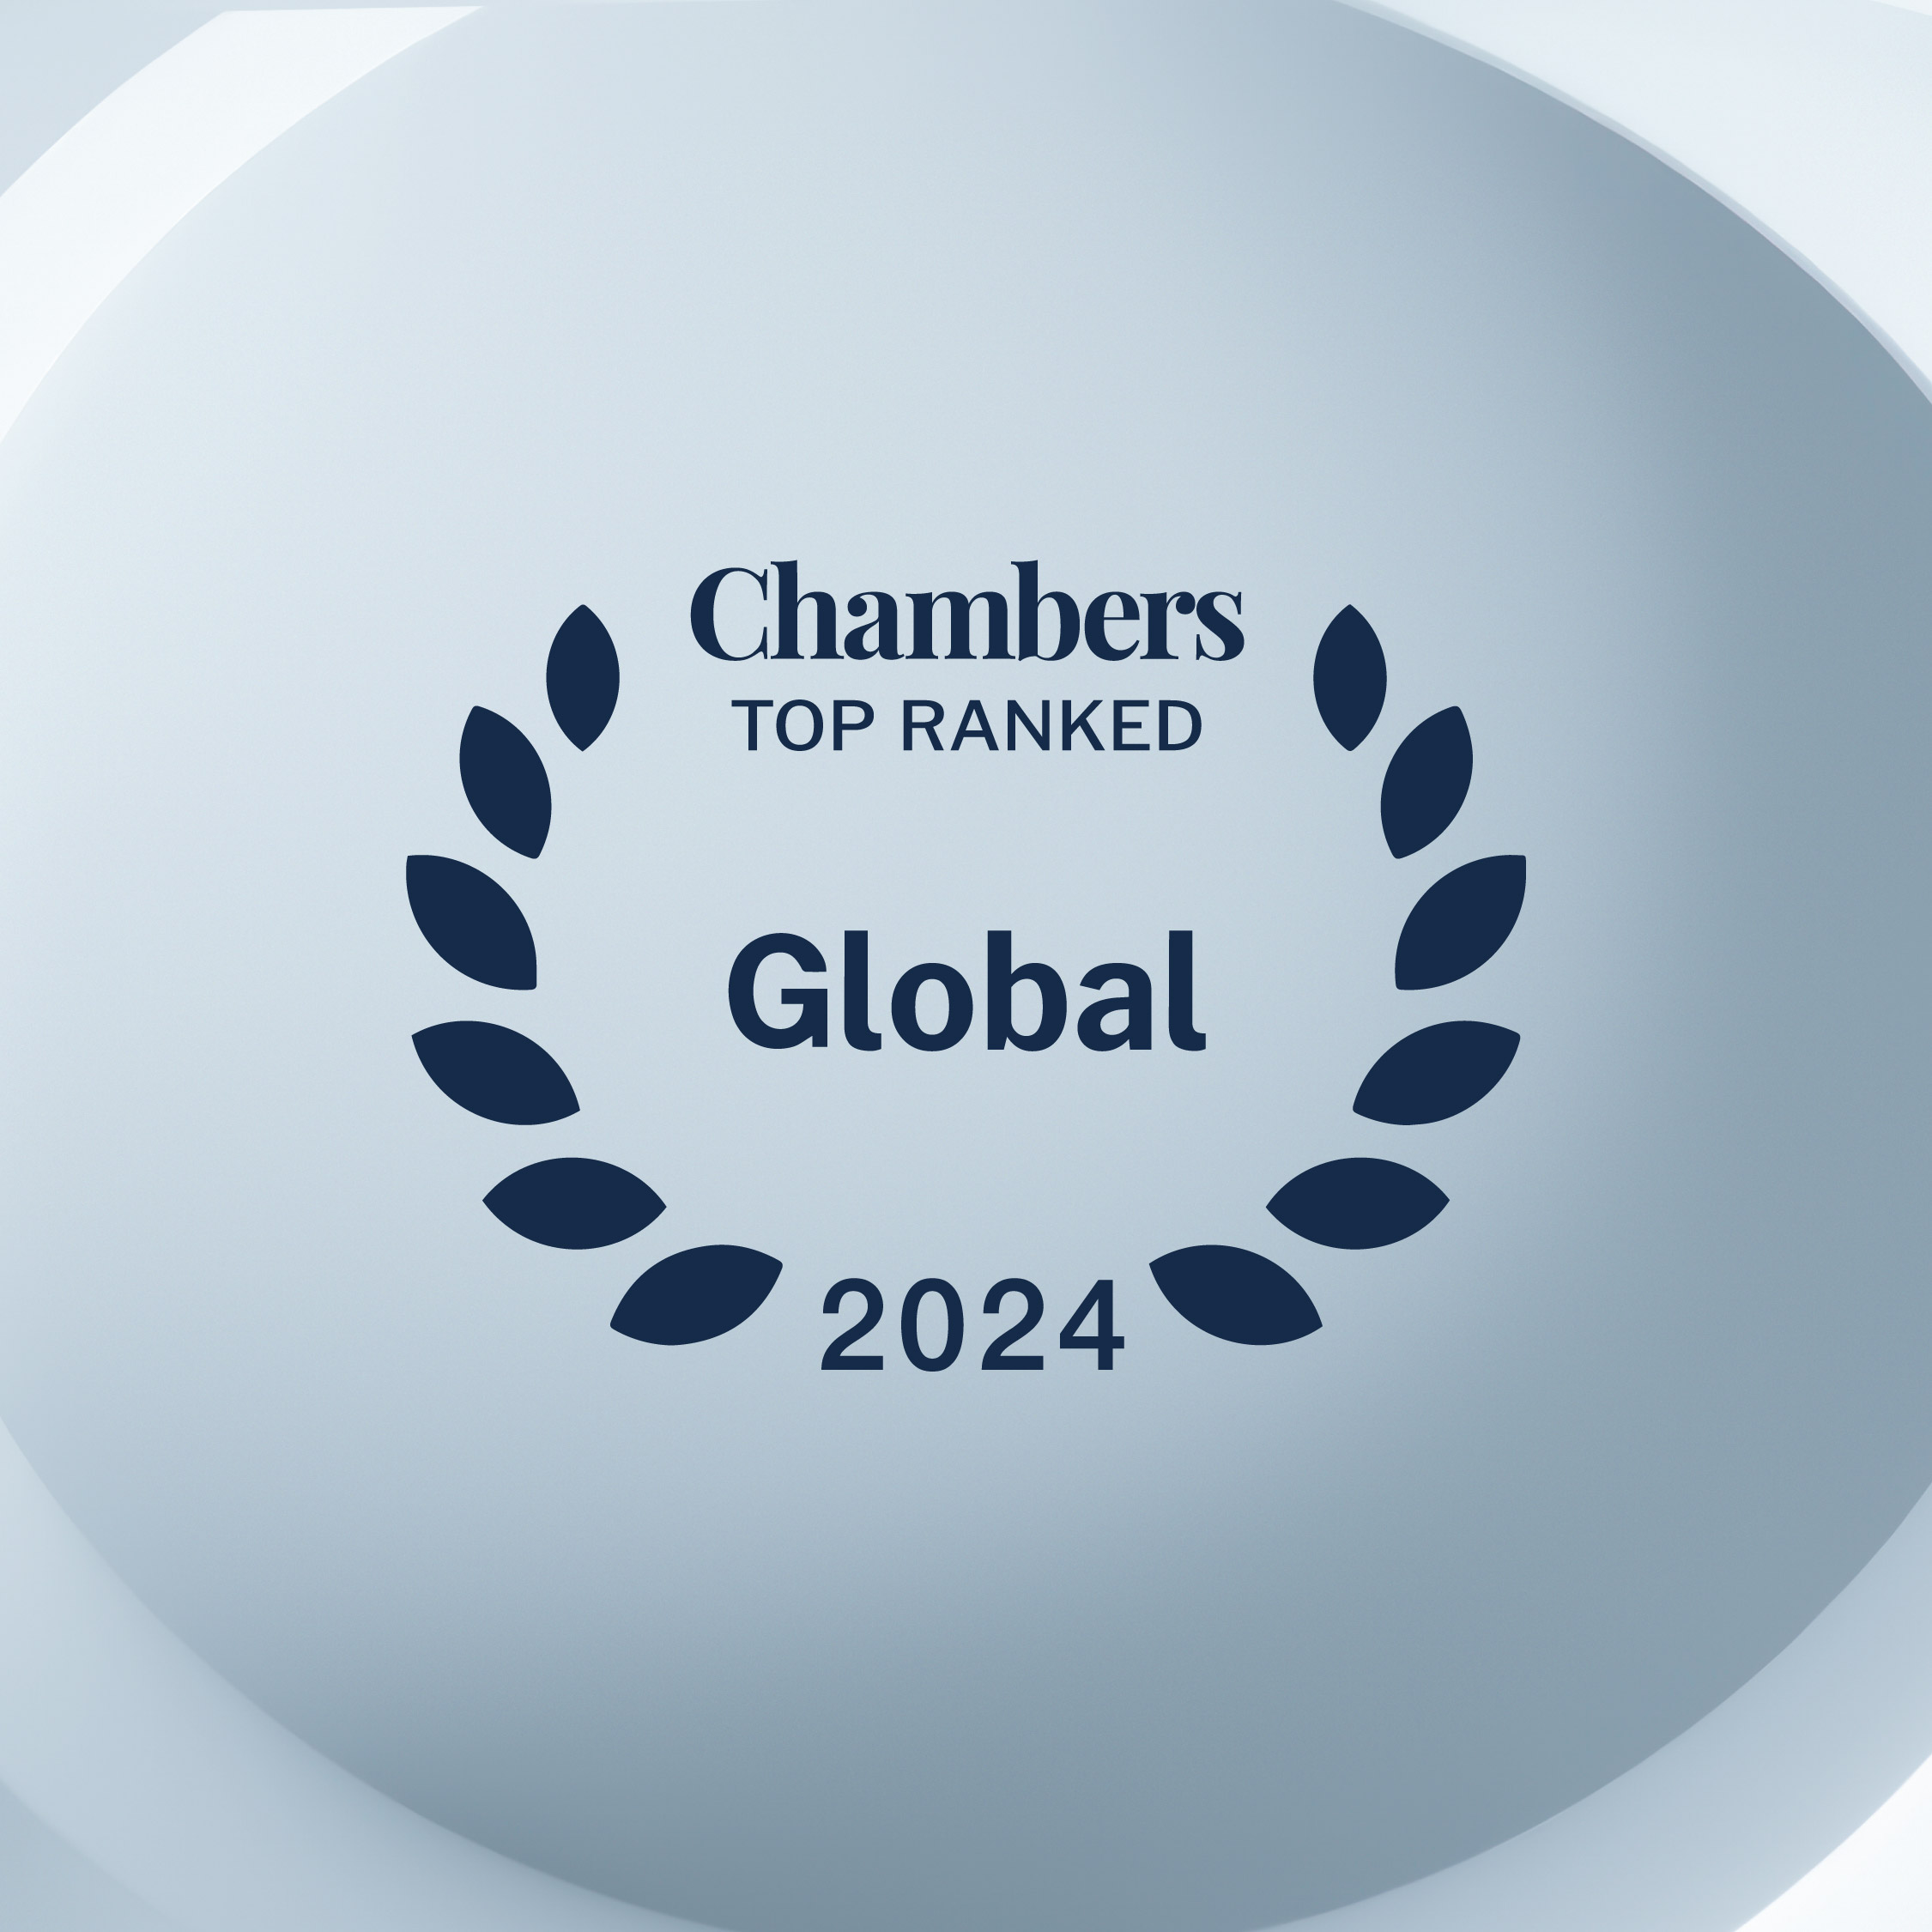 Bruchou & Funes de Rioja - Chambers TOP RANKED GLOBAL 2024